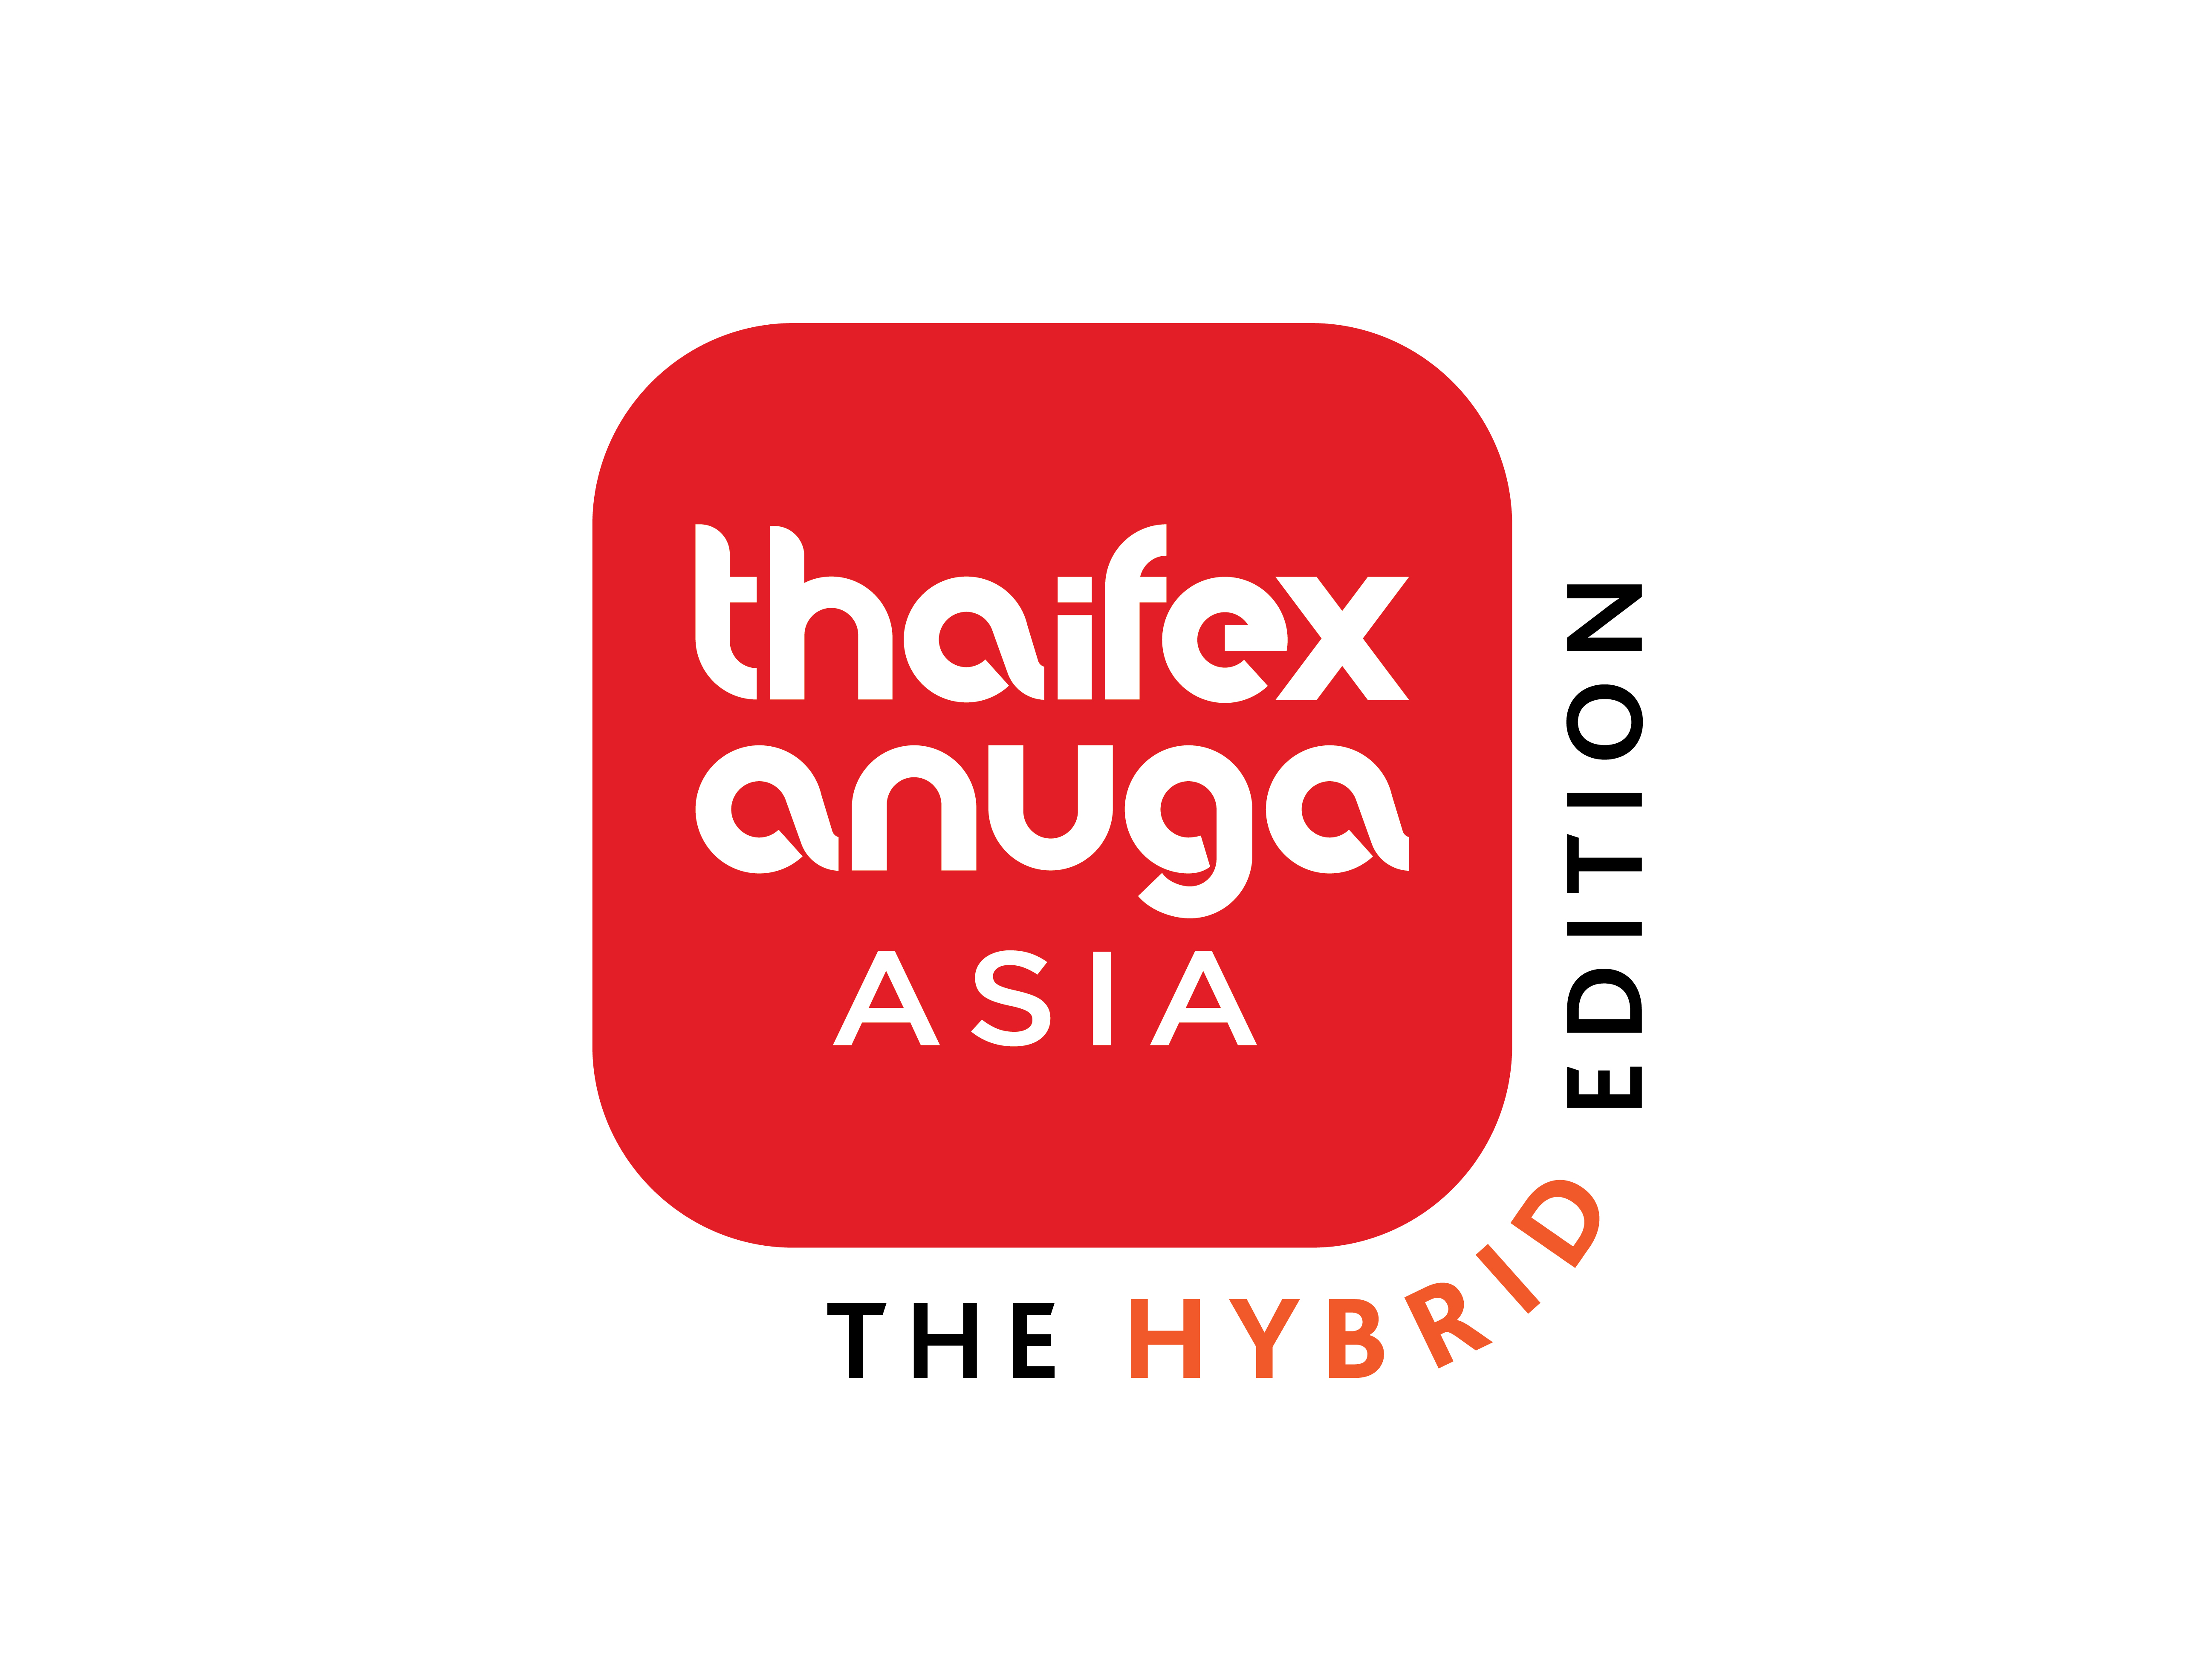 DITP จัดแสดง 11 เทรดโชว์ ในงาน THAIFEX-ANUGA ASIA 2020 The Hybrid Edition เปิดโอกาสทางธุรกิจให้ผู้ประกอบการอาหารและเครื่องดื่มทุกประเภท